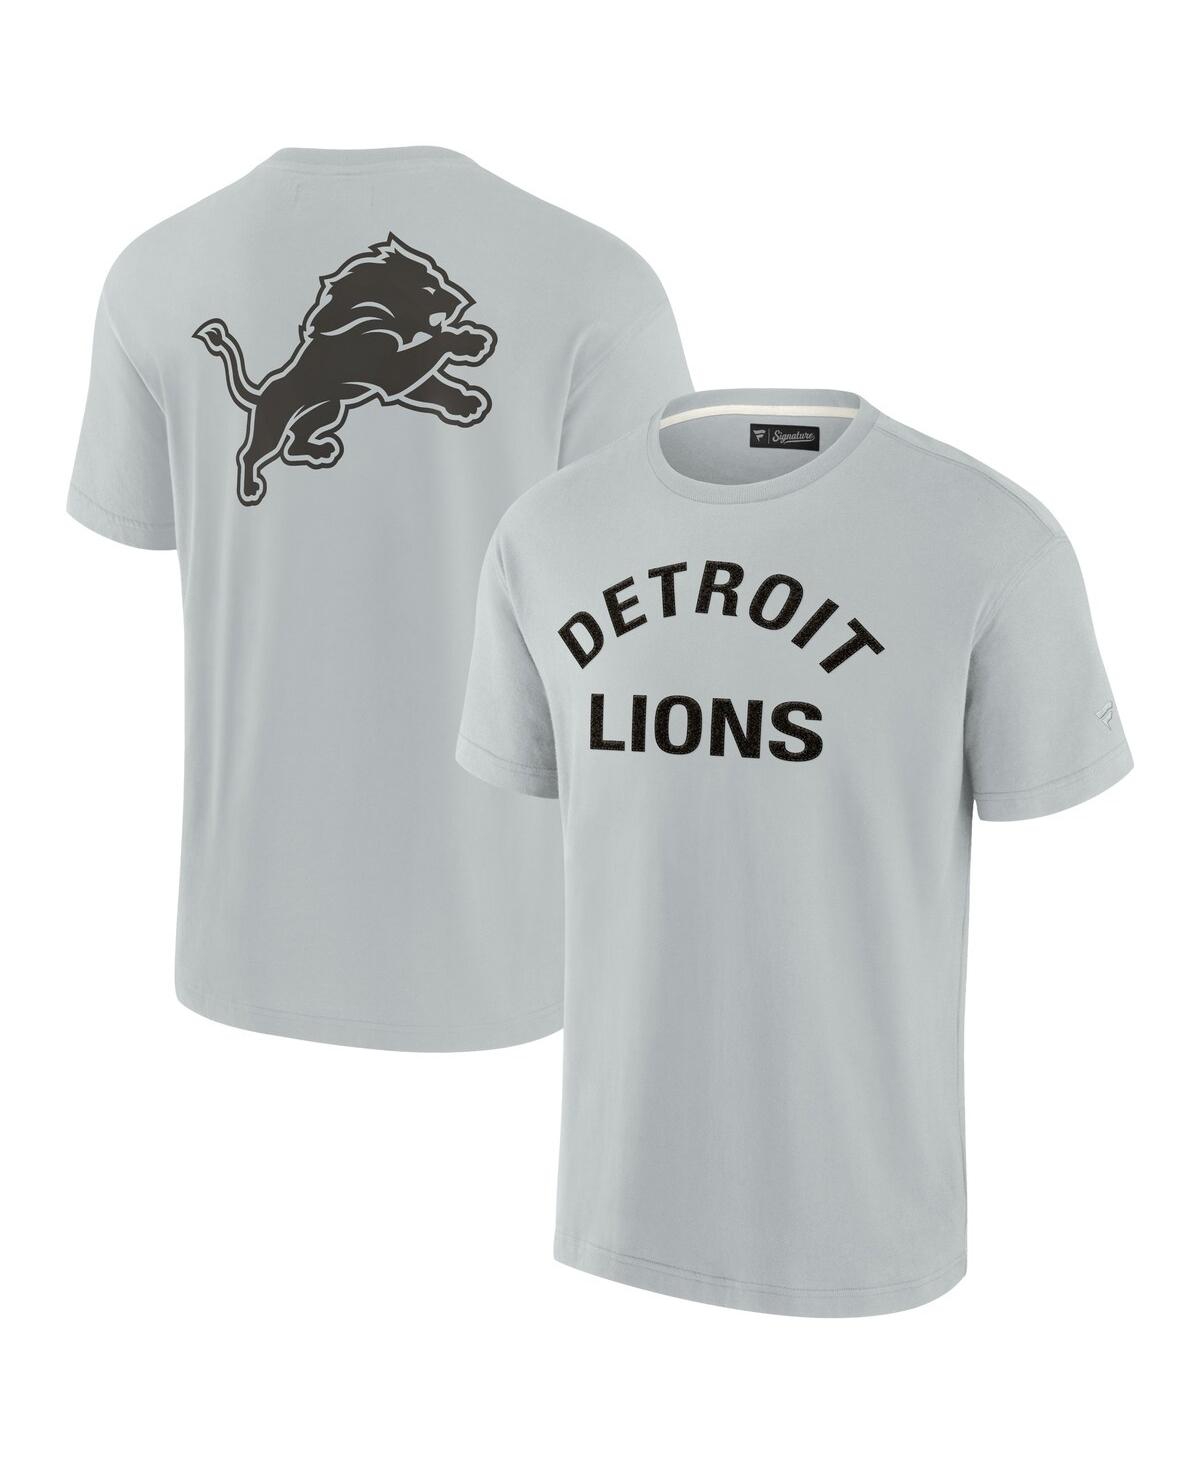 Men's and Women's Fanatics Signature Gray Detroit Lions Super Soft Short Sleeve T-shirt - Gray